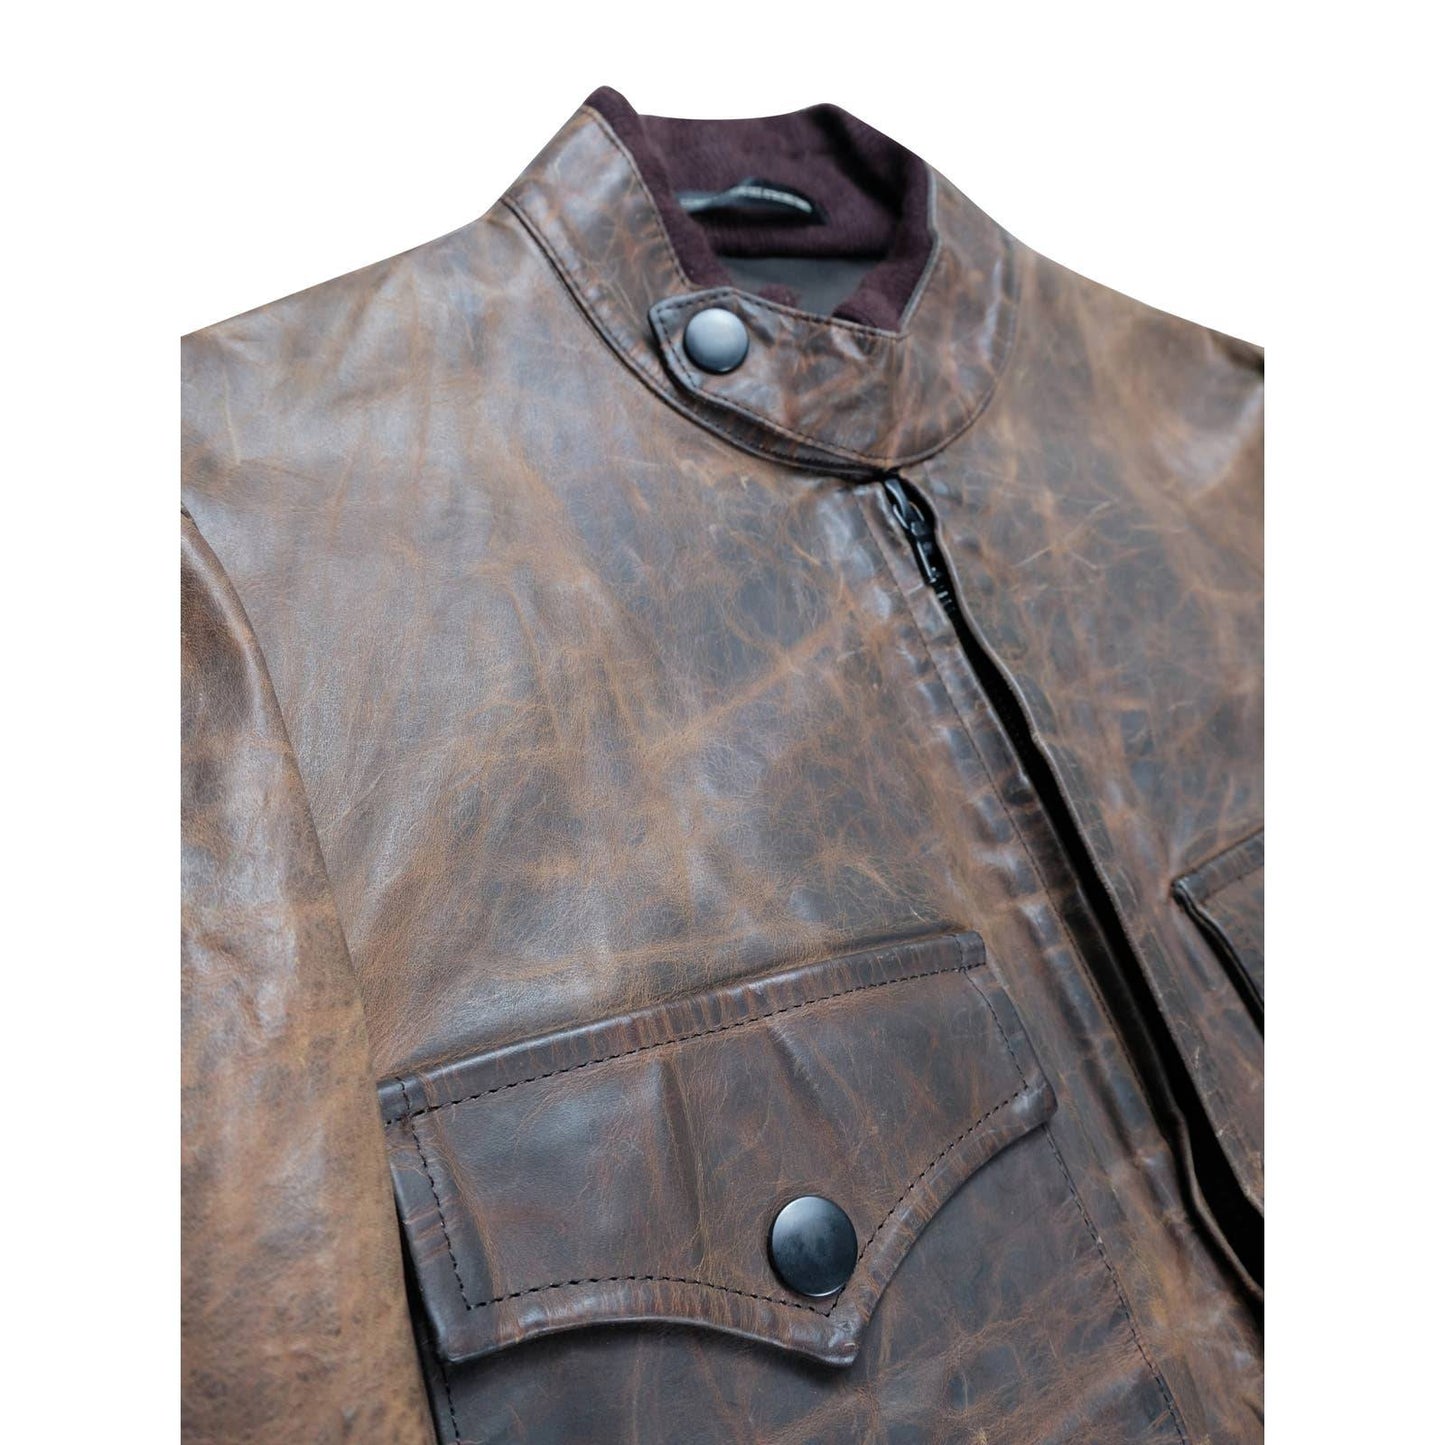 Justin Davis Pin-up Leather Jacket - Groupie